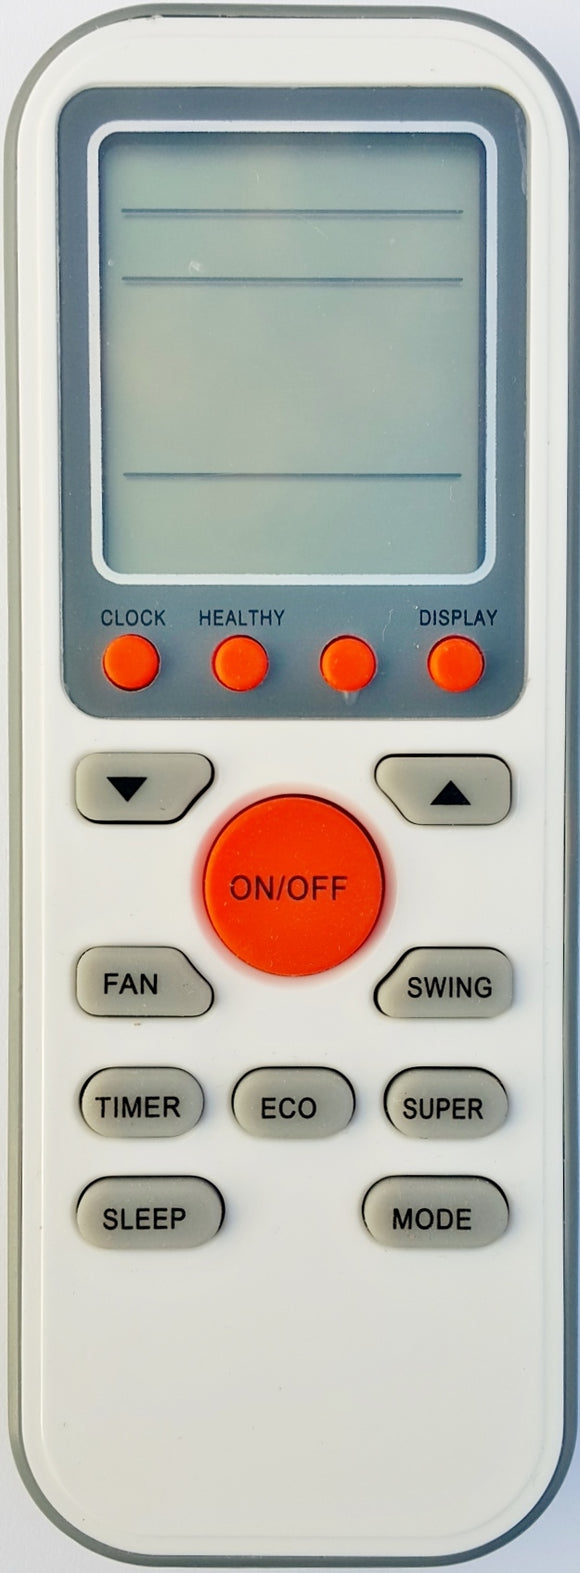 ELFA AIR CONDITIONER REMOTE CONTROL GYKQ-36 - TAC-24F/A  TAC24F/A  AIR CONDITIONER - Remote Control Warehouse